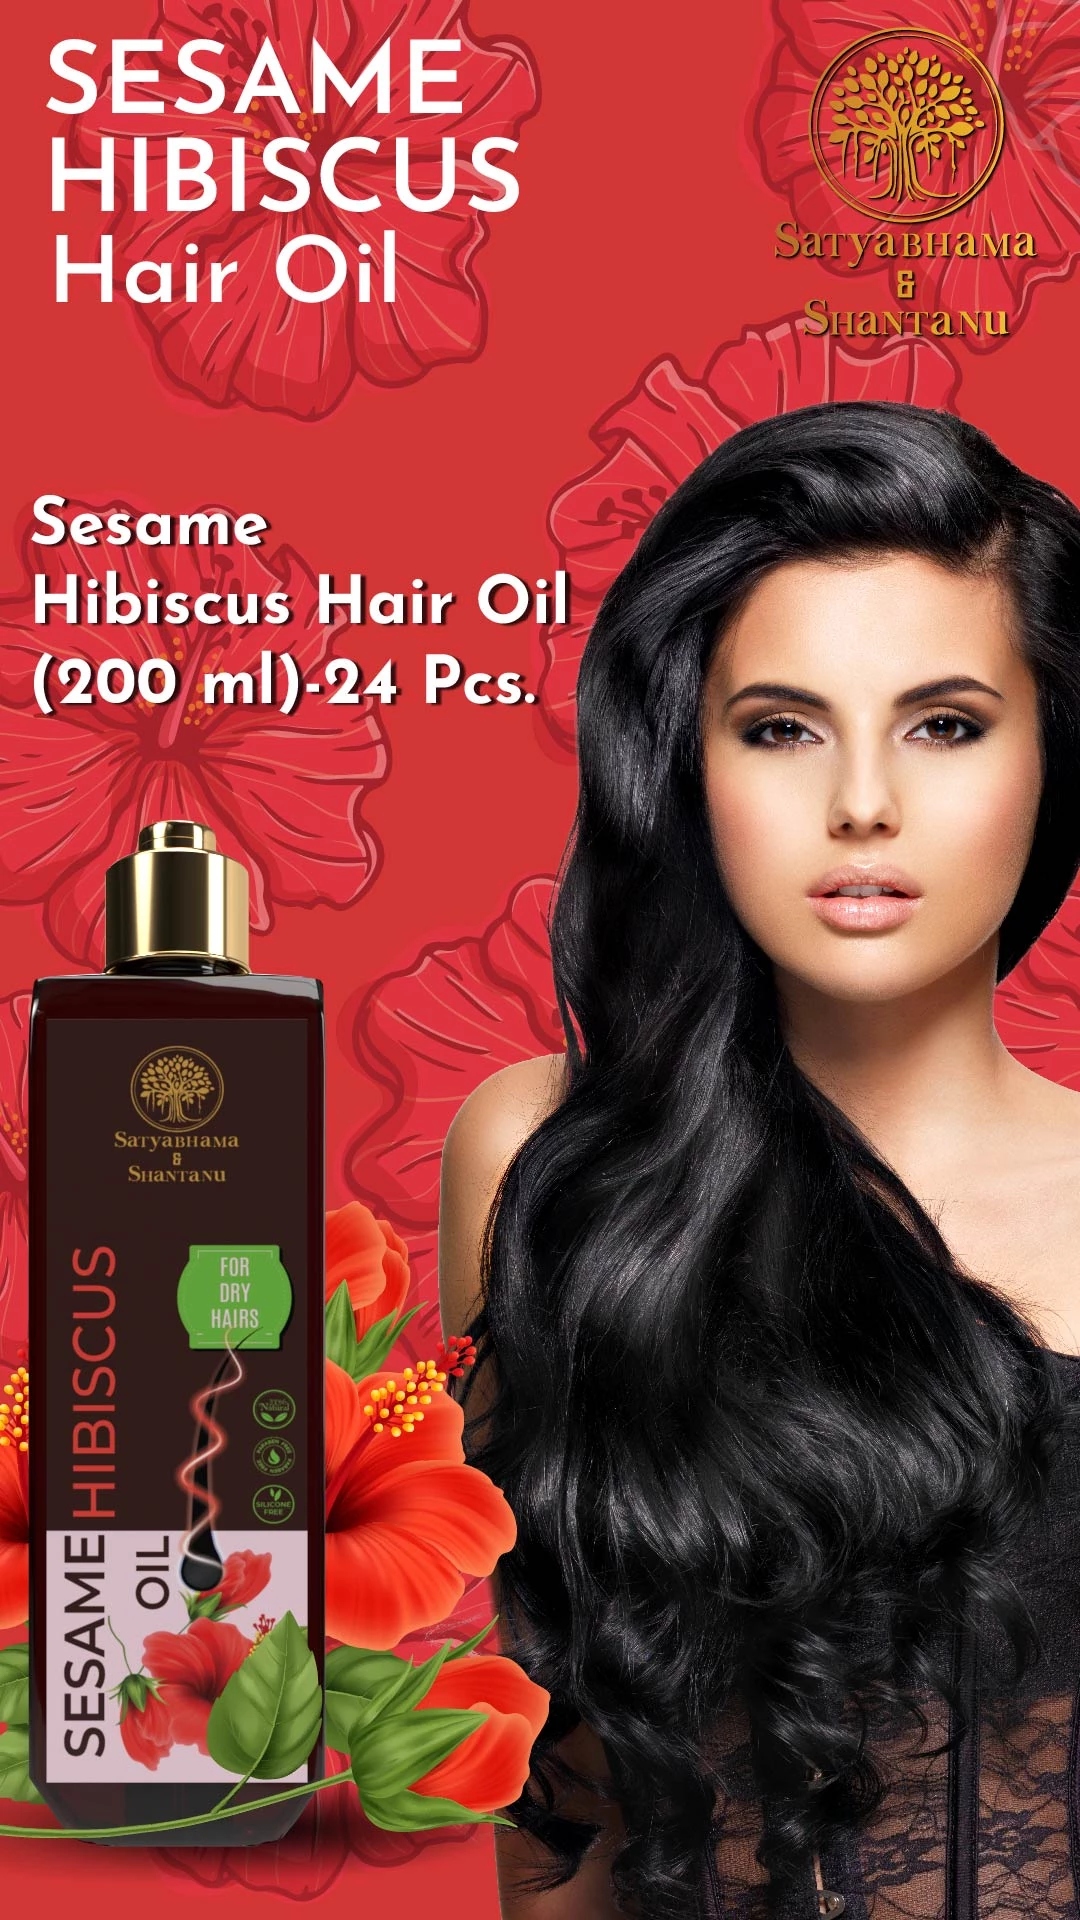 RBV B2B Sesame Hibiscus Hair Oil (200 ml)-24 Pcs.